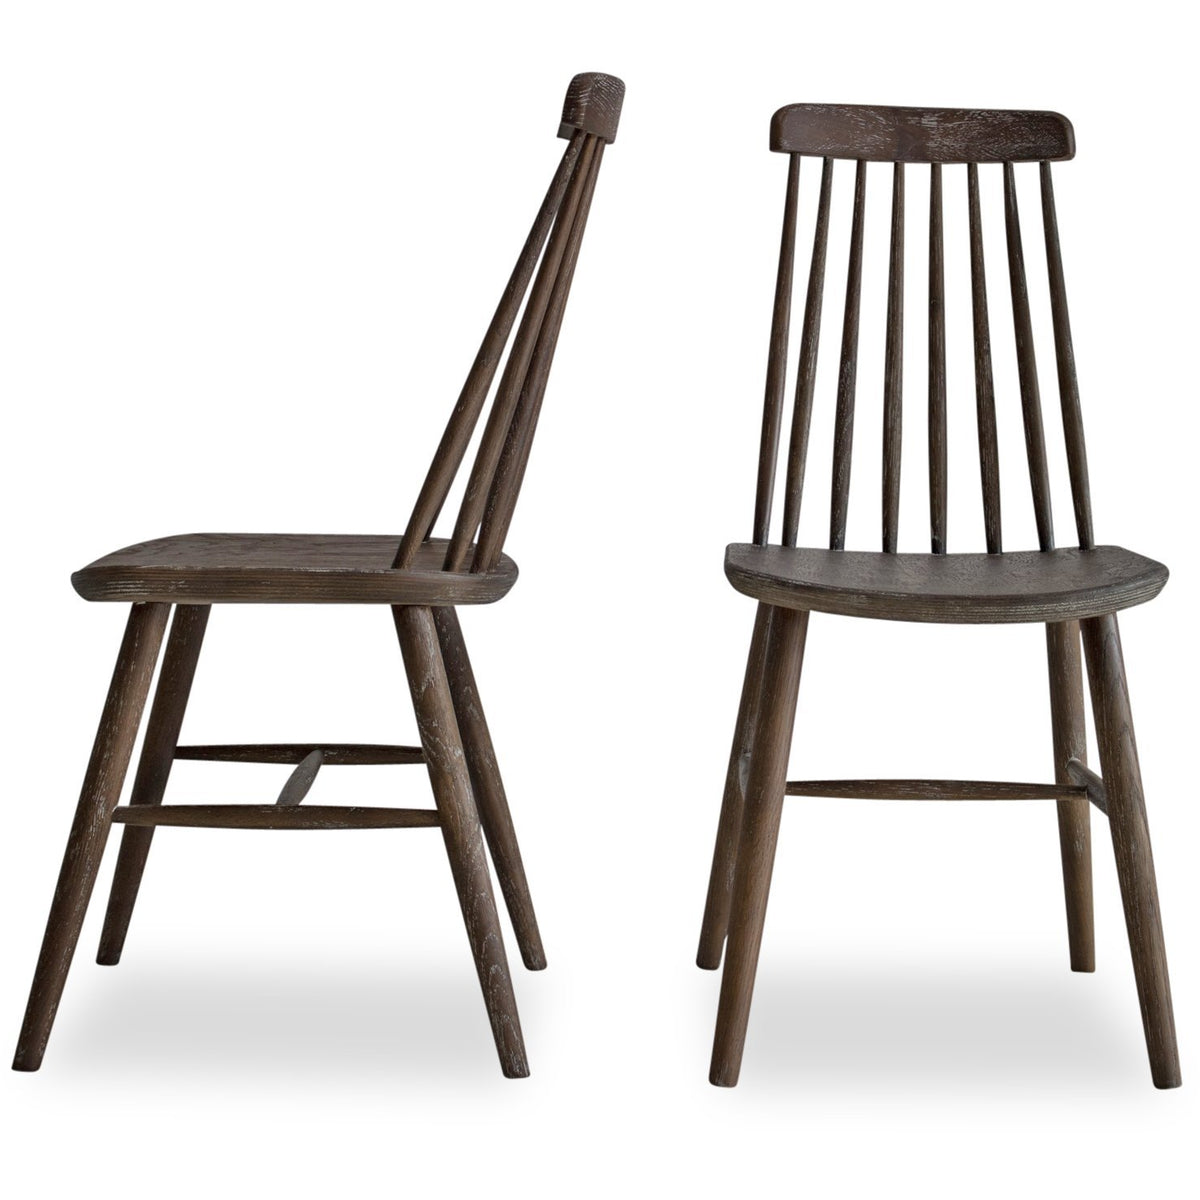 Edloe Finch Boxwood Farmhouse Dining Chairs, Set of 2